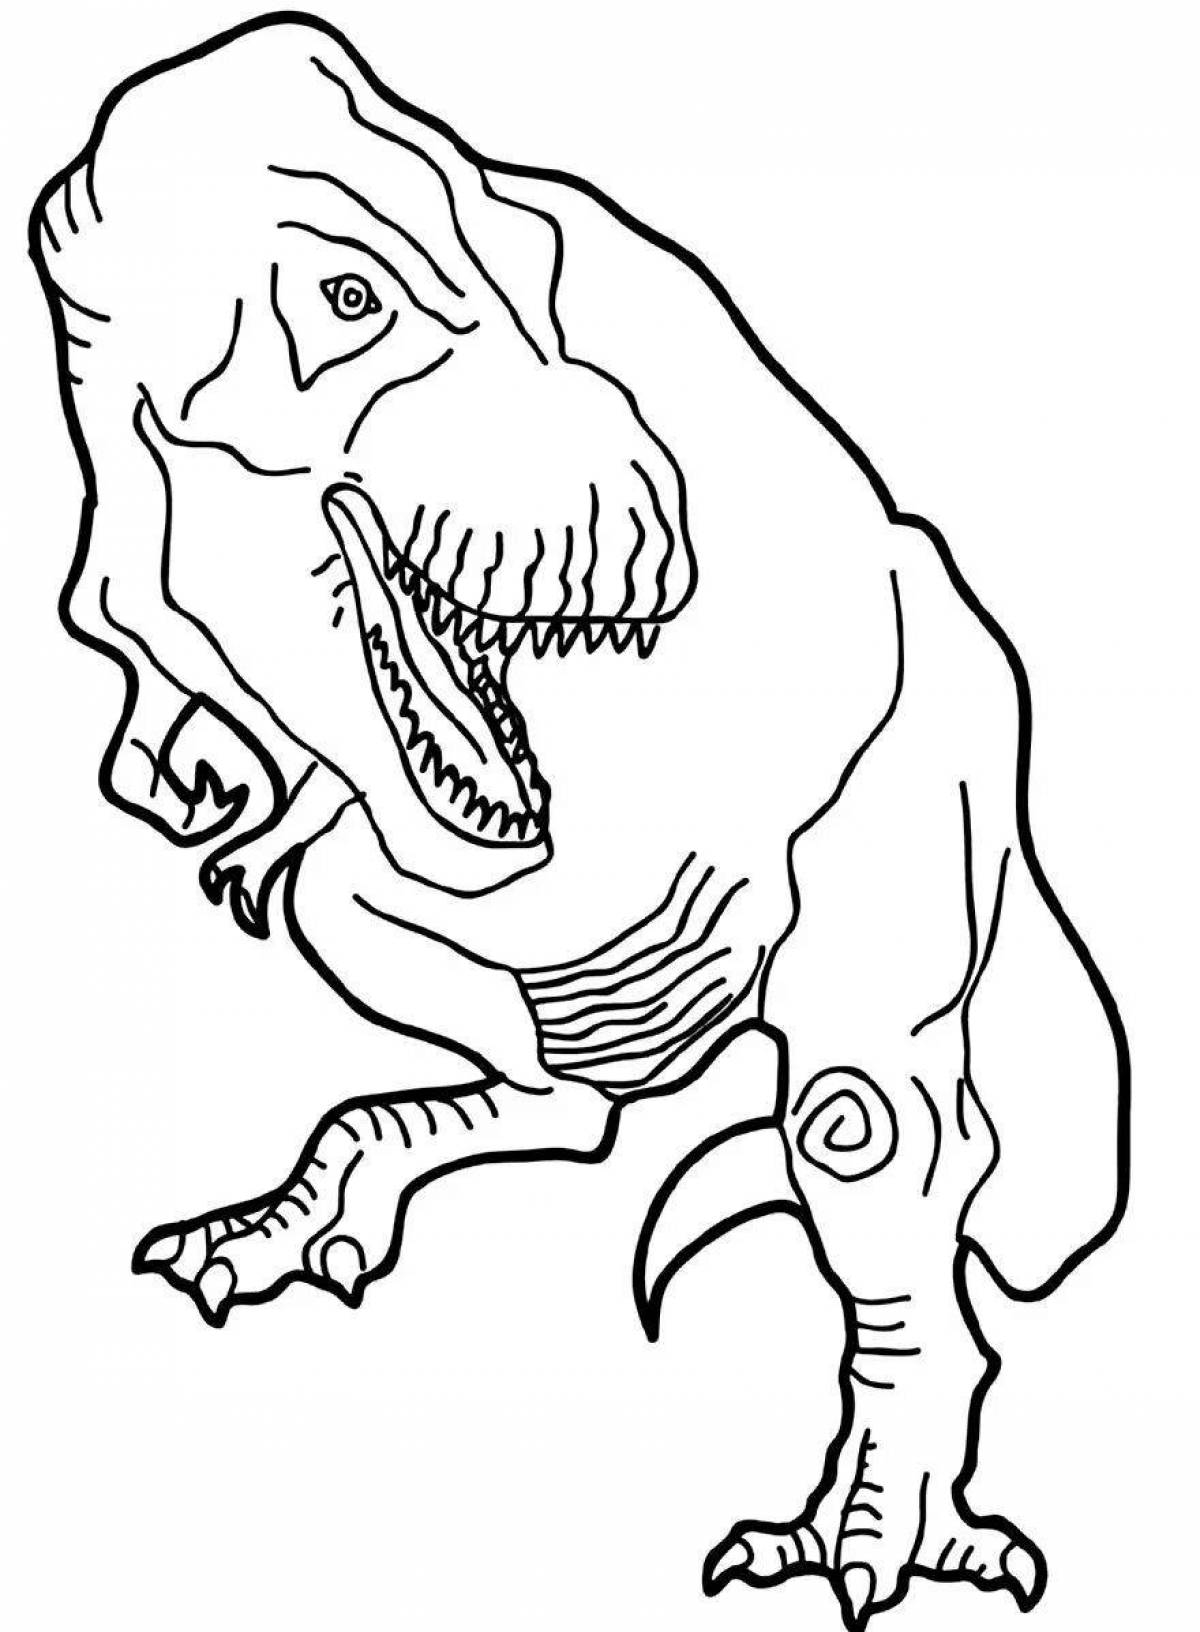 Colorful tyrannosaurus seal coloring page